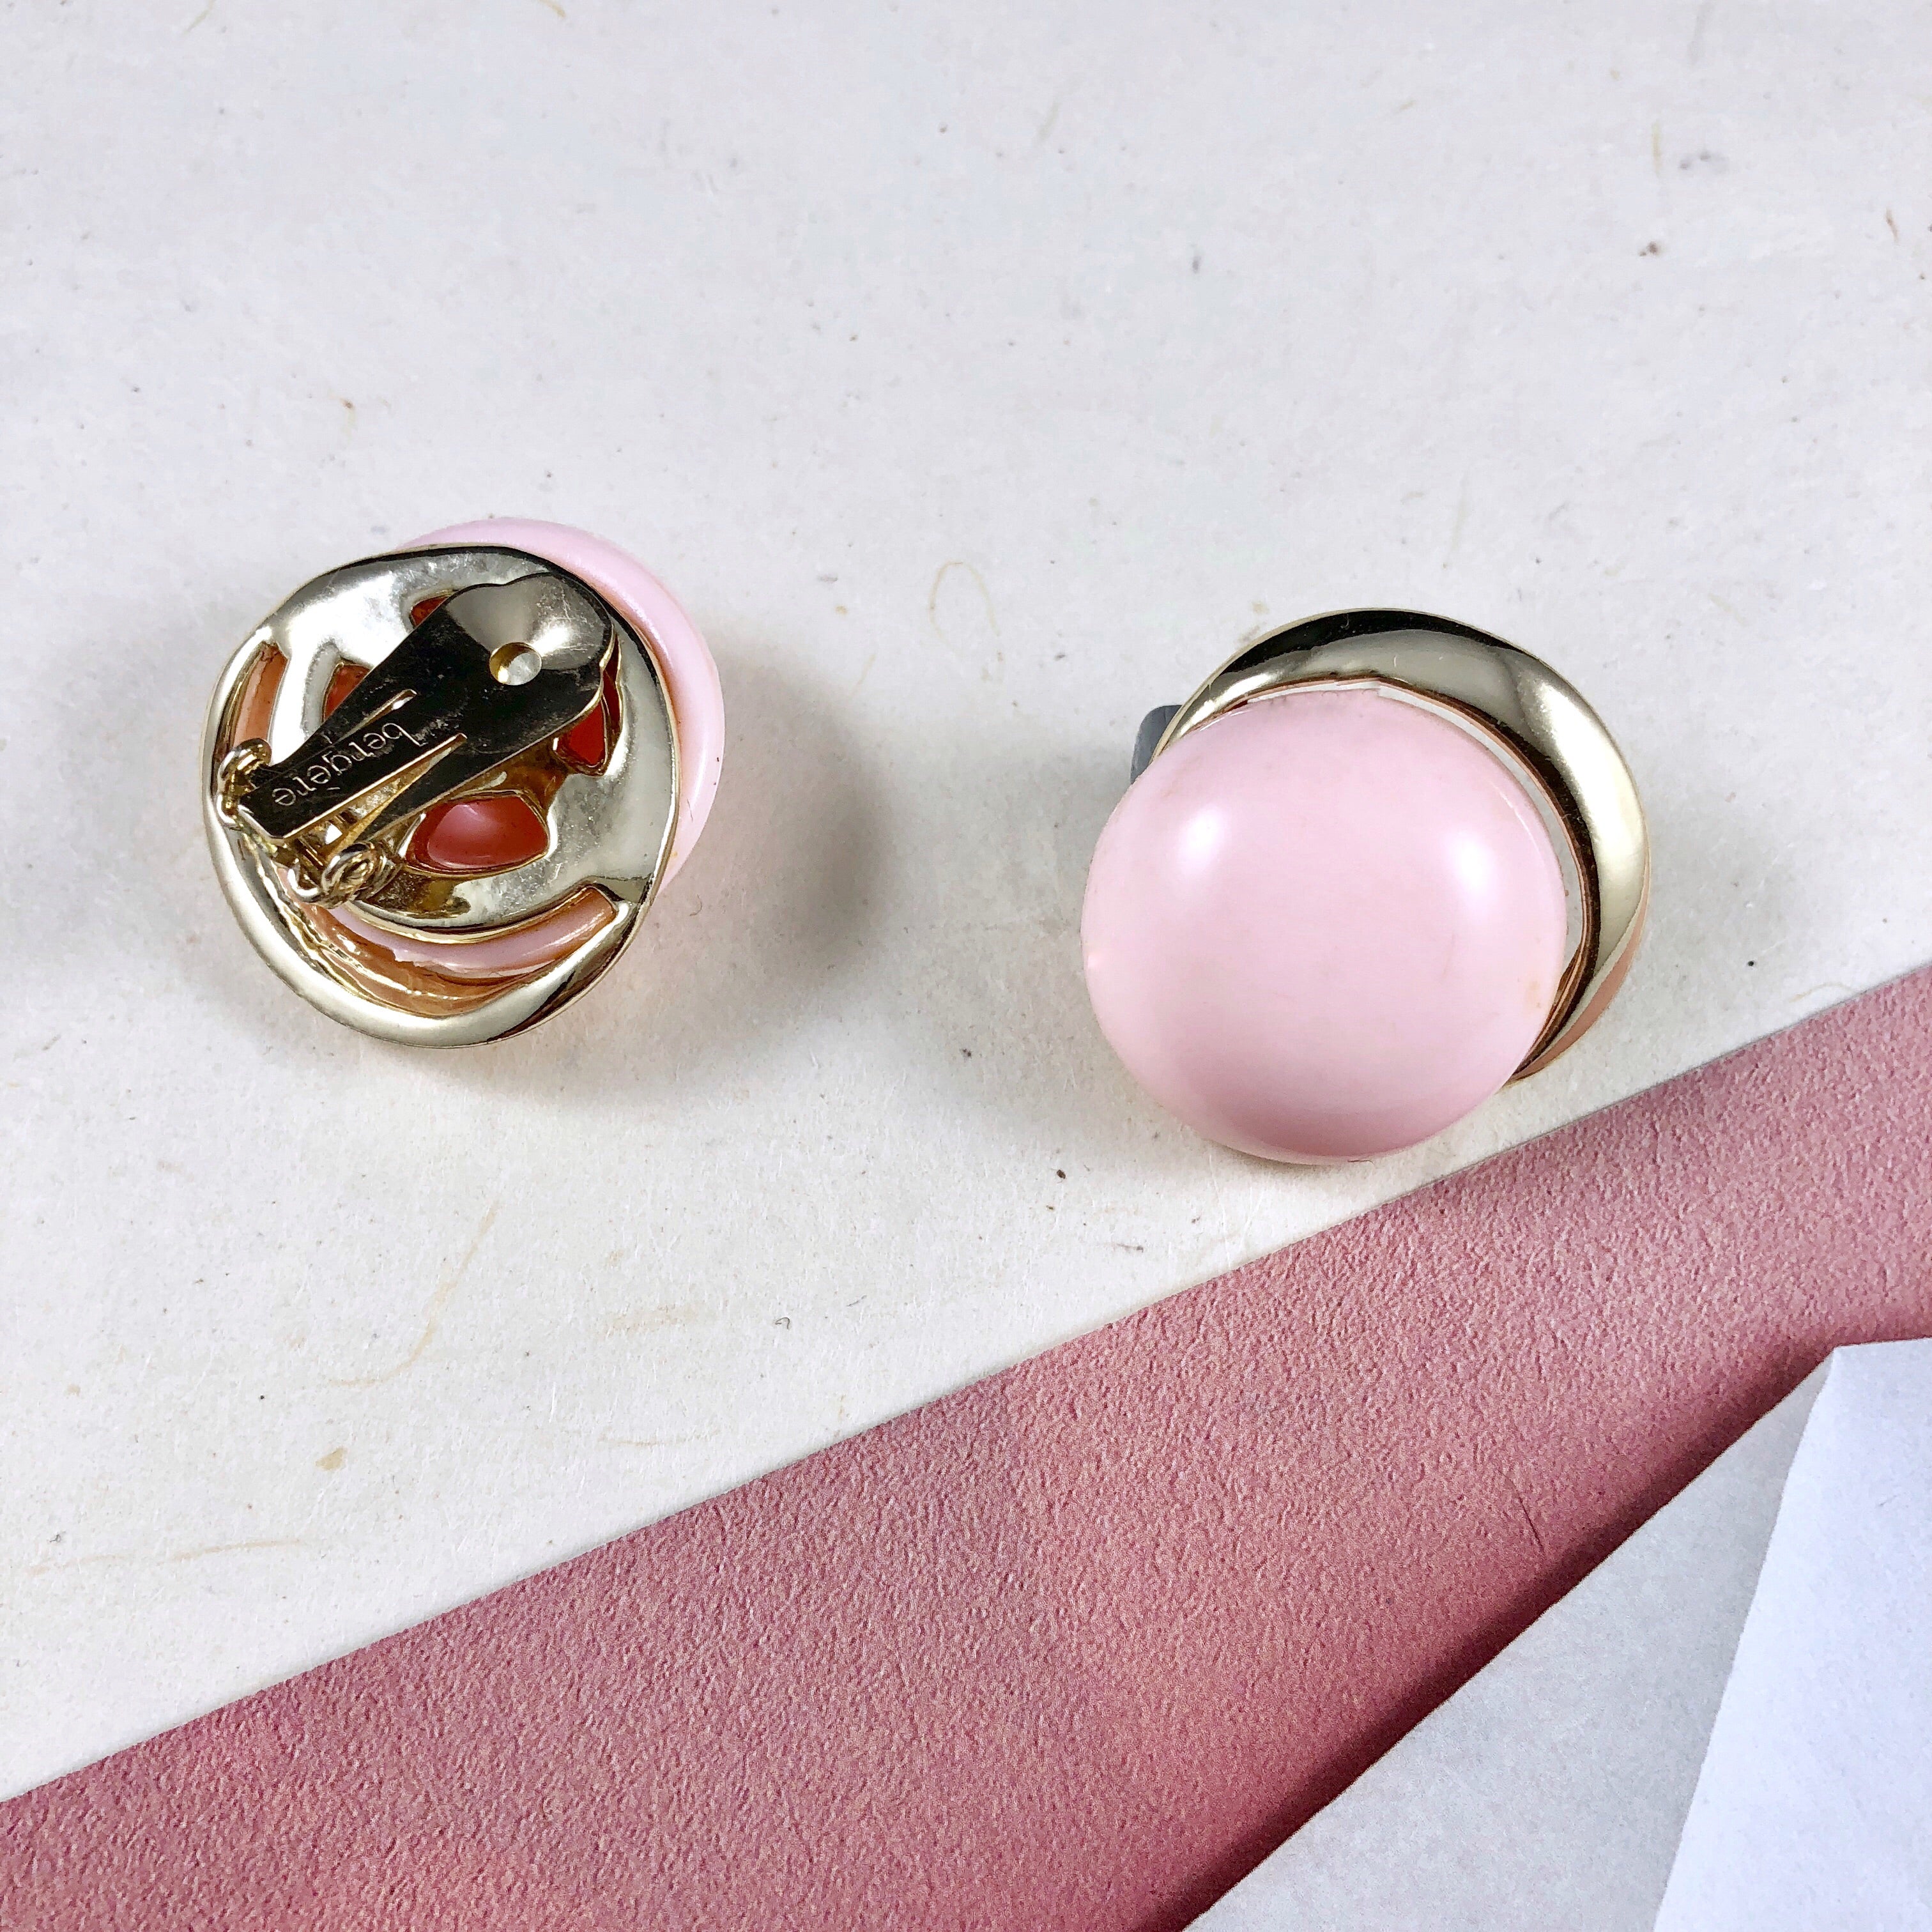 Vintage 60s Bergère ballerina pink button earrings